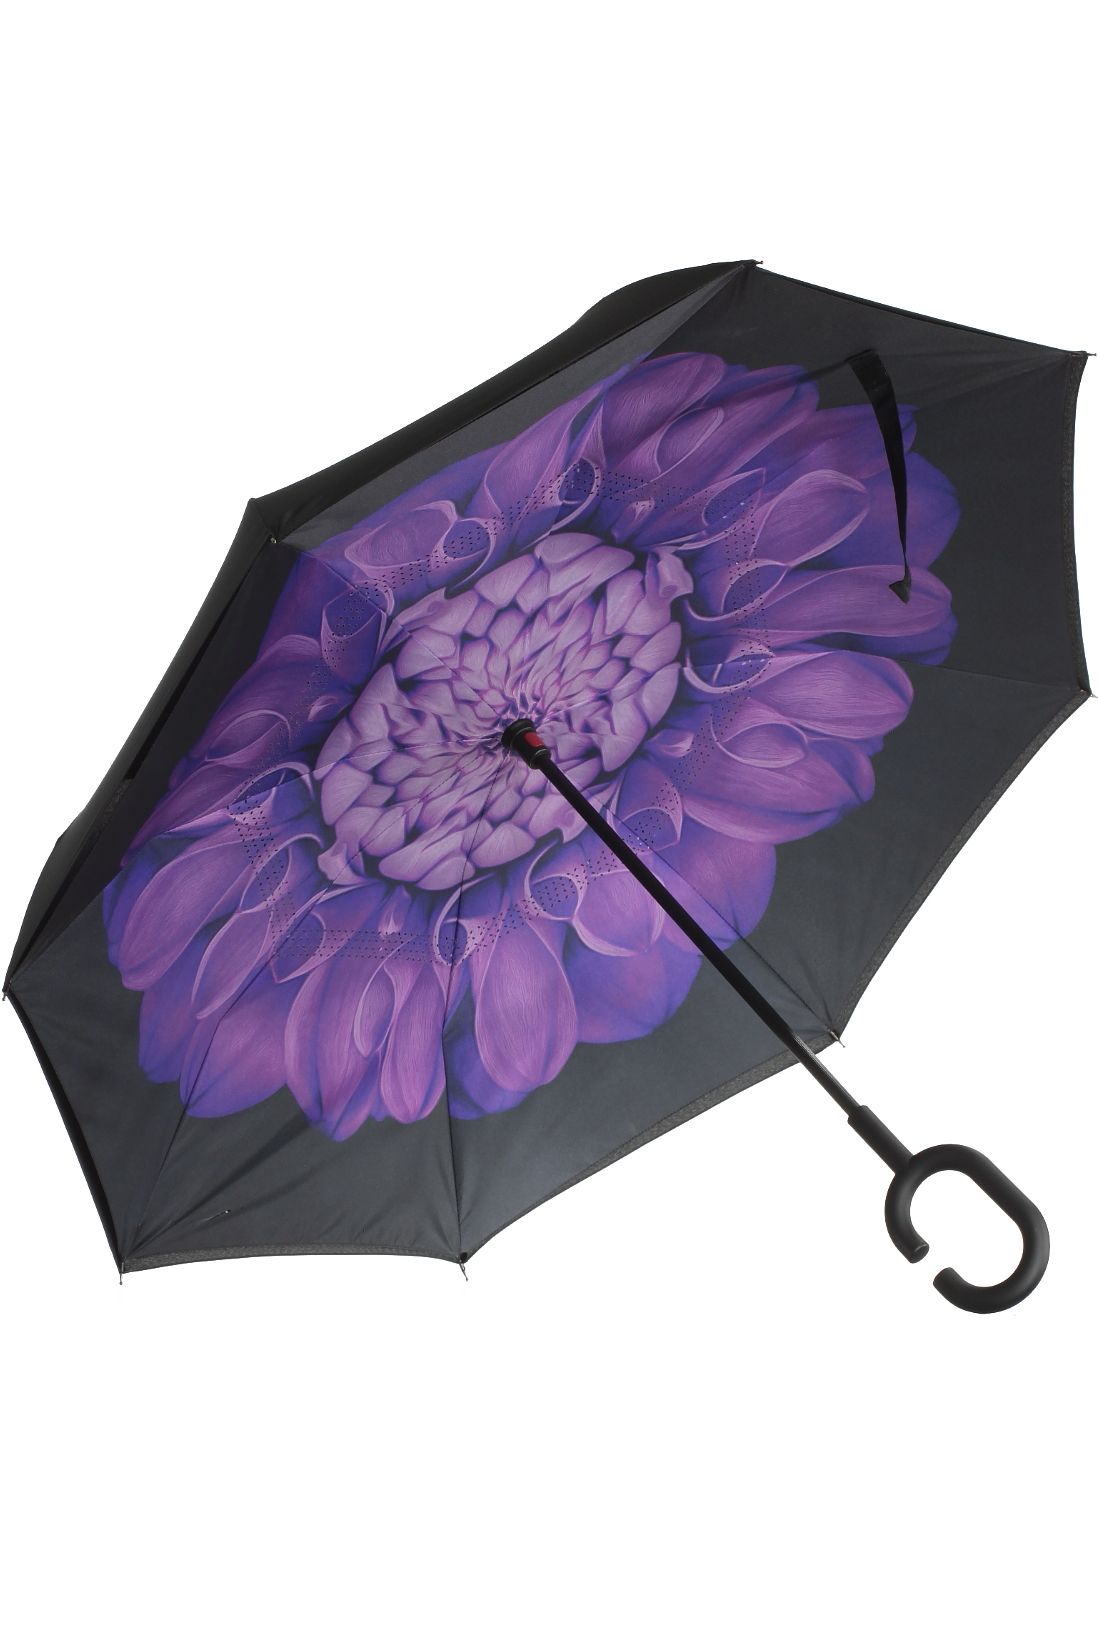 Вайлдберриз зонты женские. Зонт трость вайлдберриз. Зонты на вайлдберриз. Зонт Romit трость. Валдберис зонт женский.